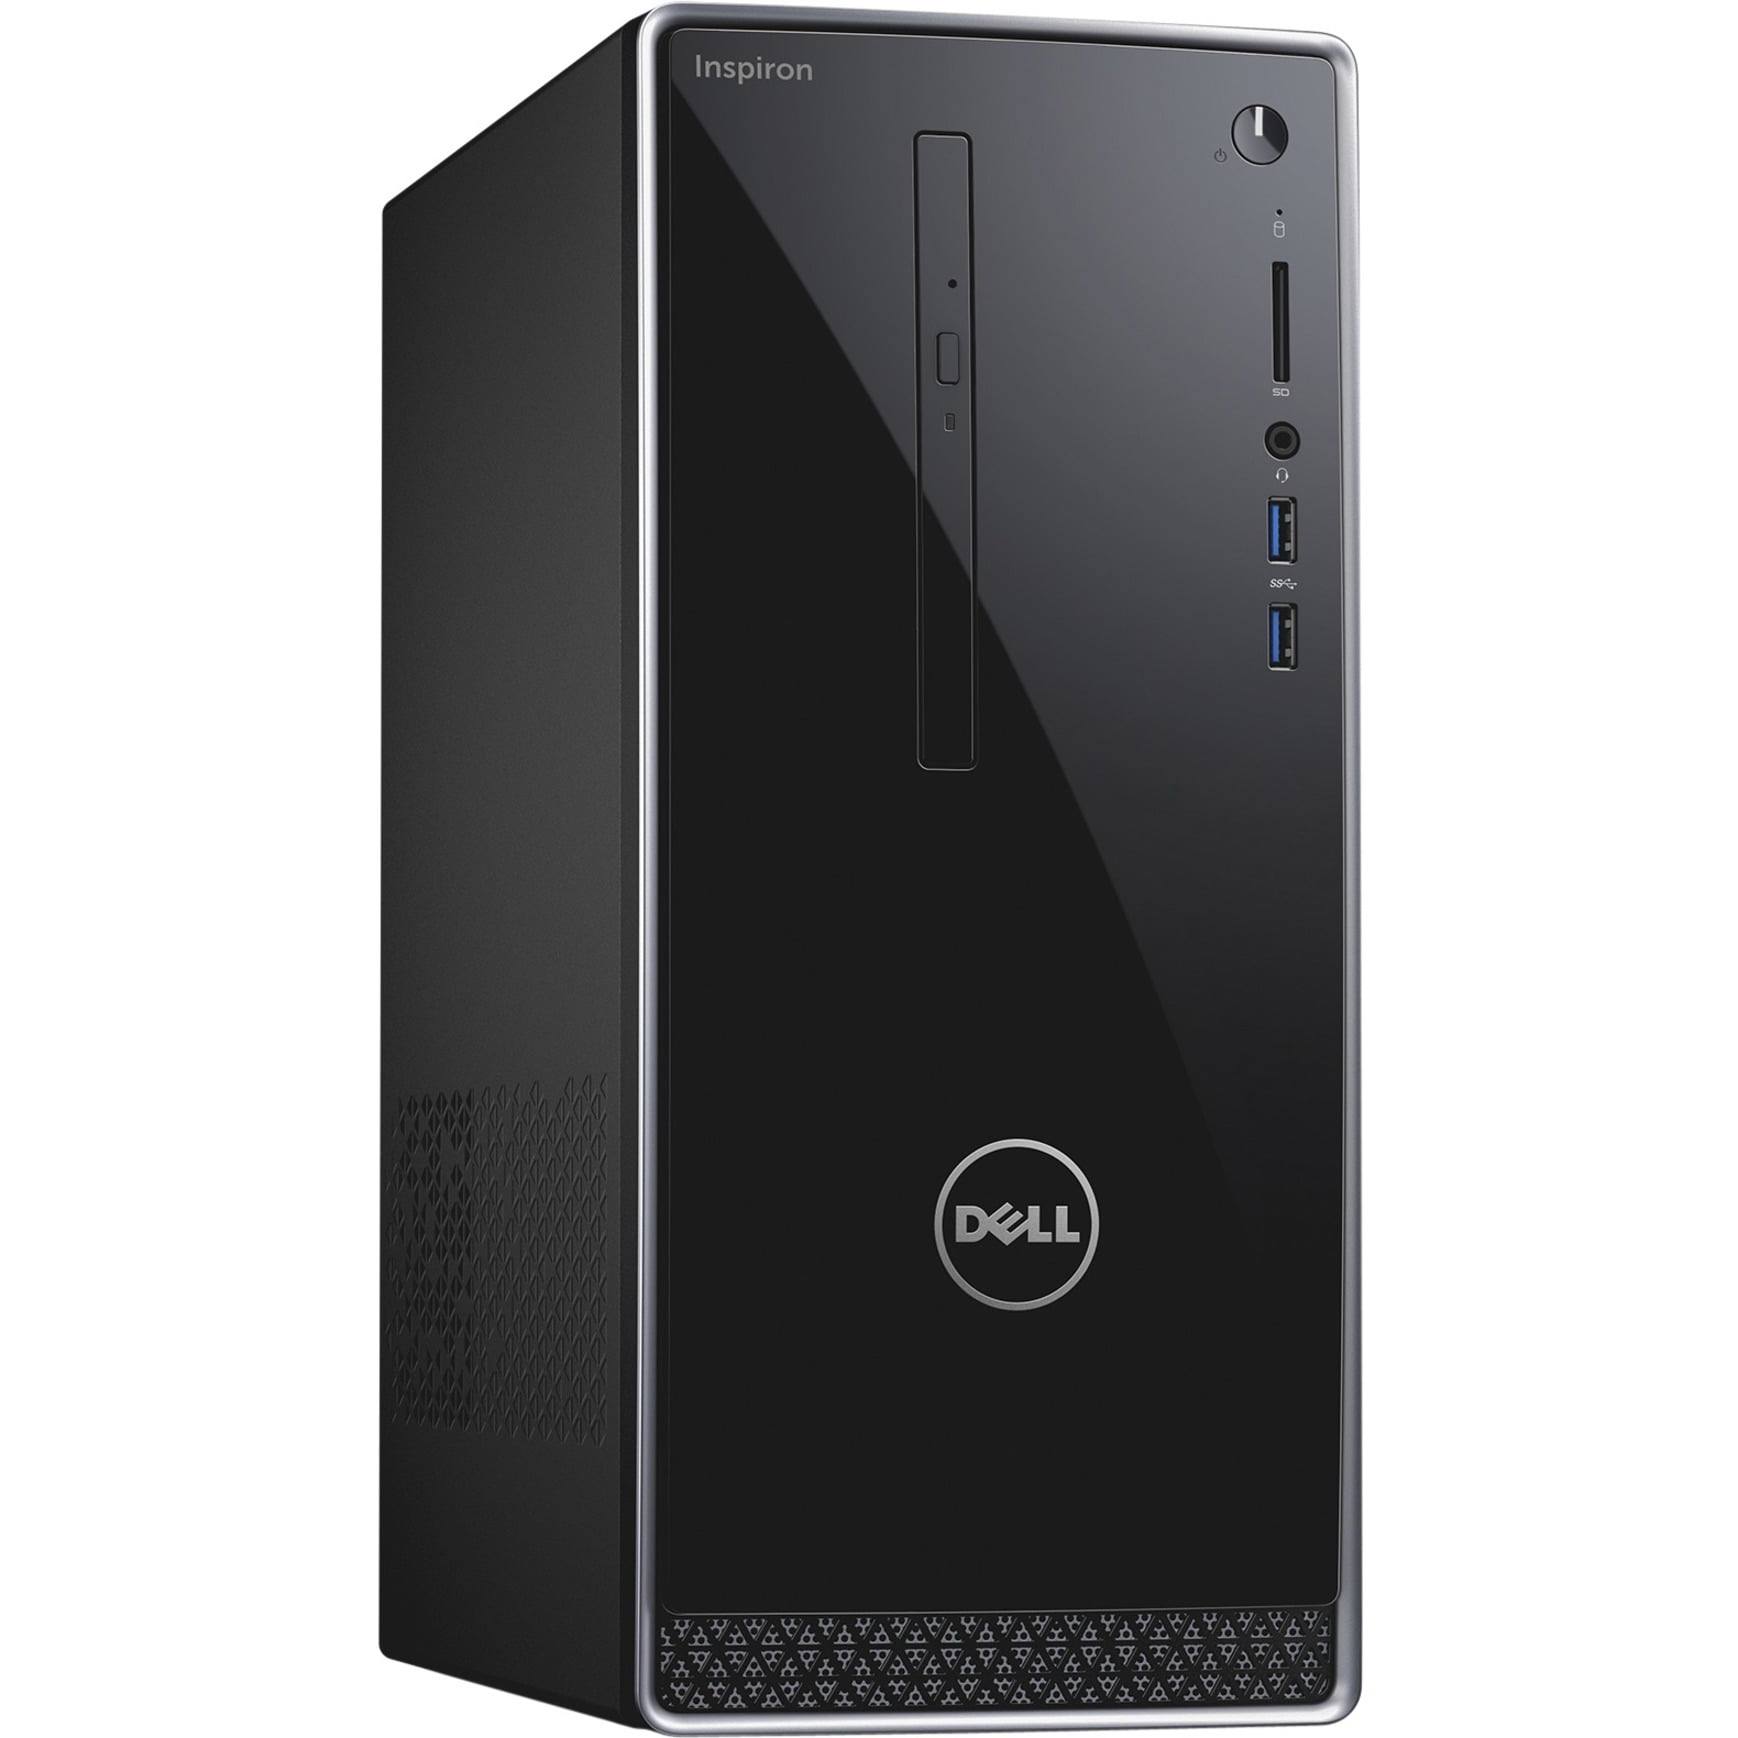 Dell Inspiron 3000 3650 Desktop Computer, Intel Core i5 6th Gen i5-6400  2.70 GHz, 8 GB RAM DDR3L SDRAM, 1 TB HDD, Silver